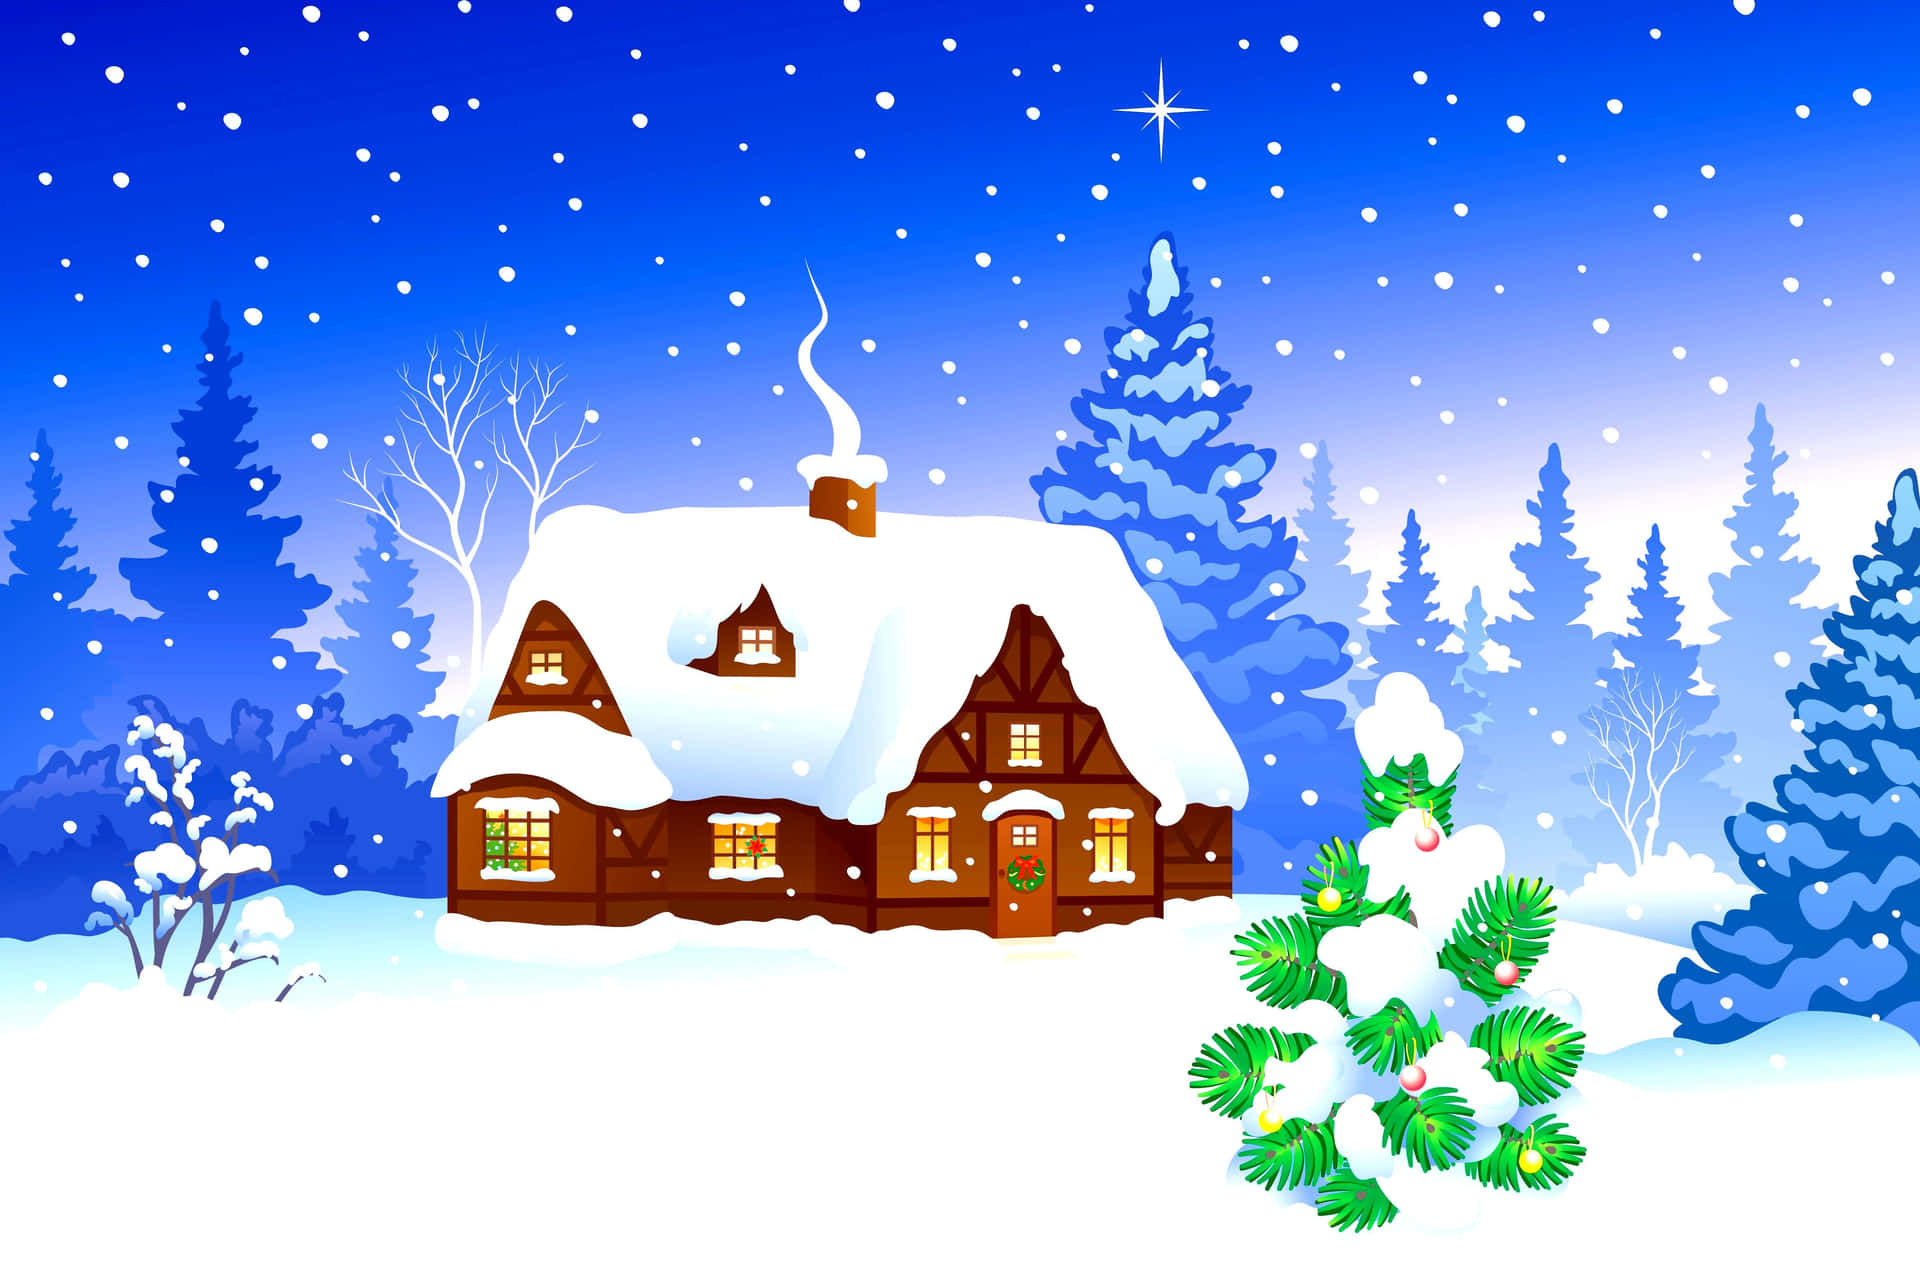 Download Winter Holiday Desktop Digital Artwork Wallpaper 